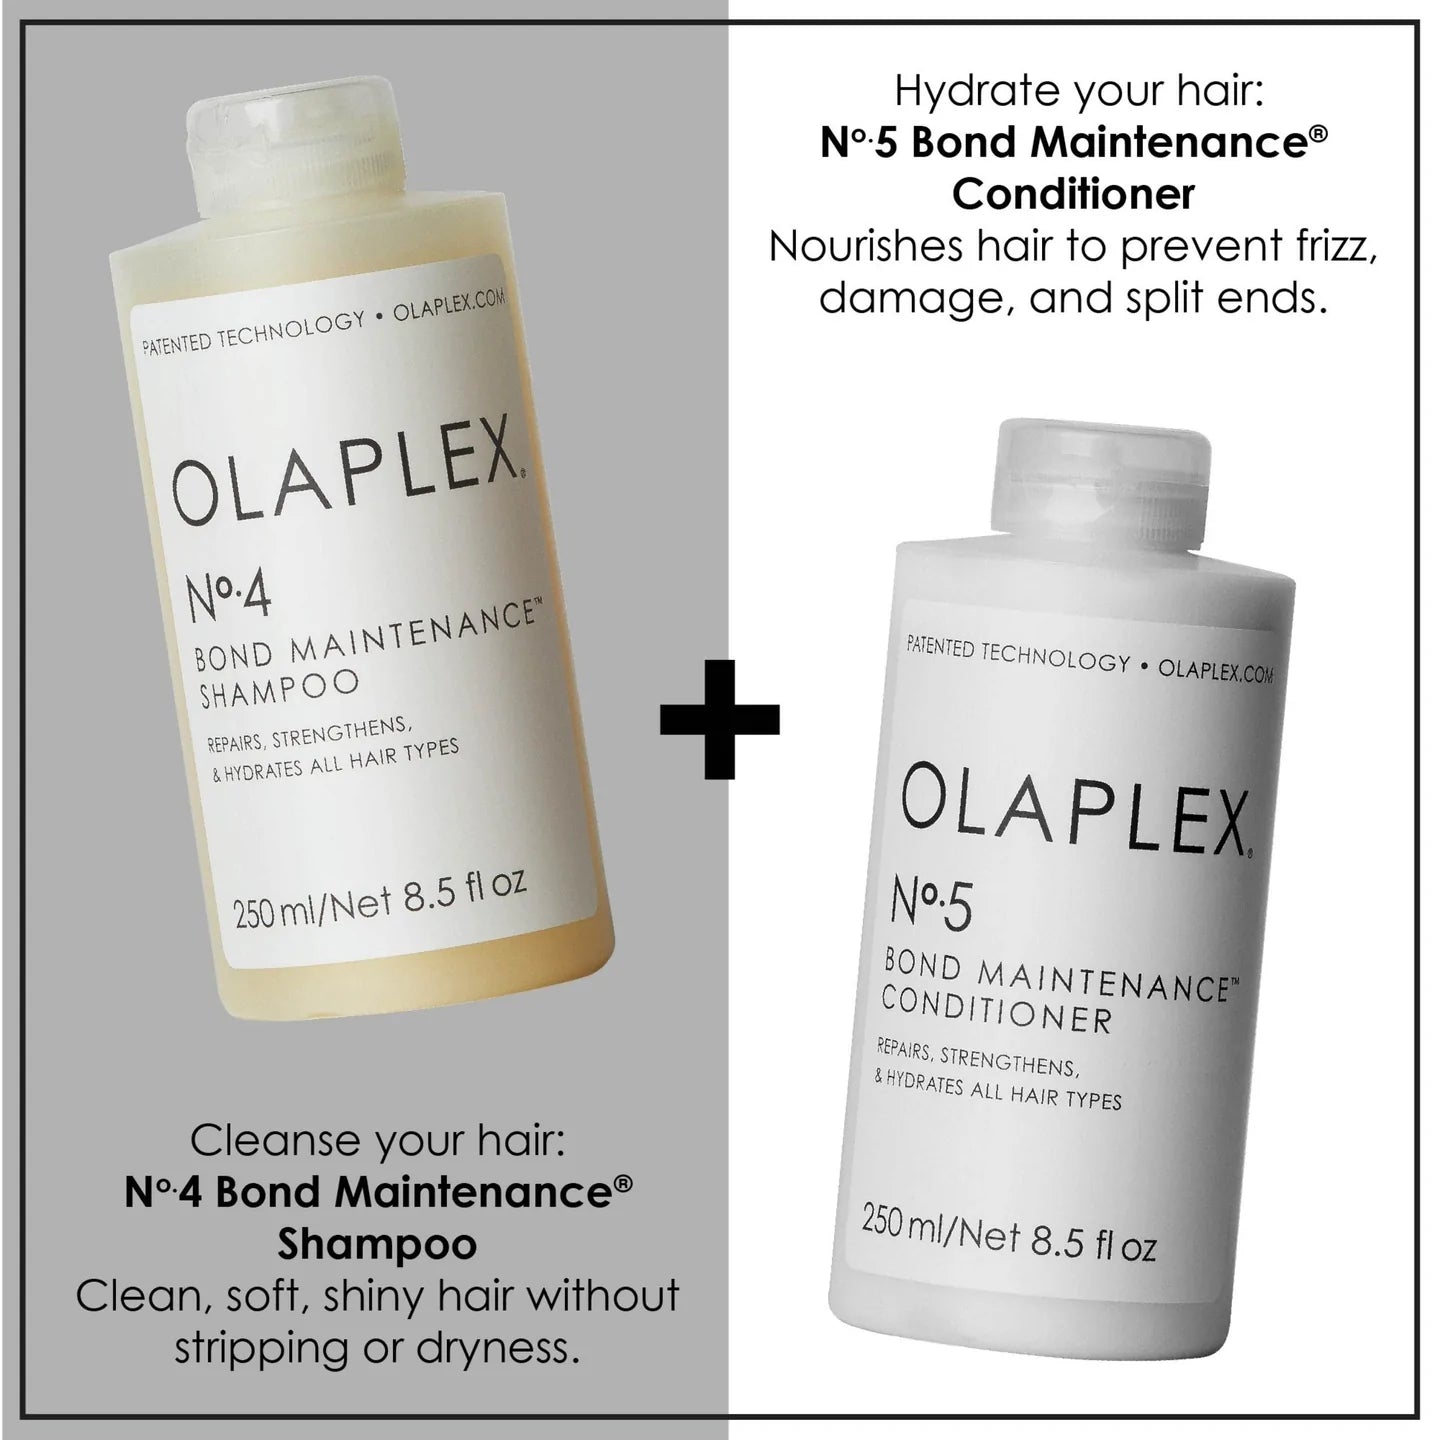 Olaplex Hair Repair Treatment Kit, Shampoo & conditioner benefits